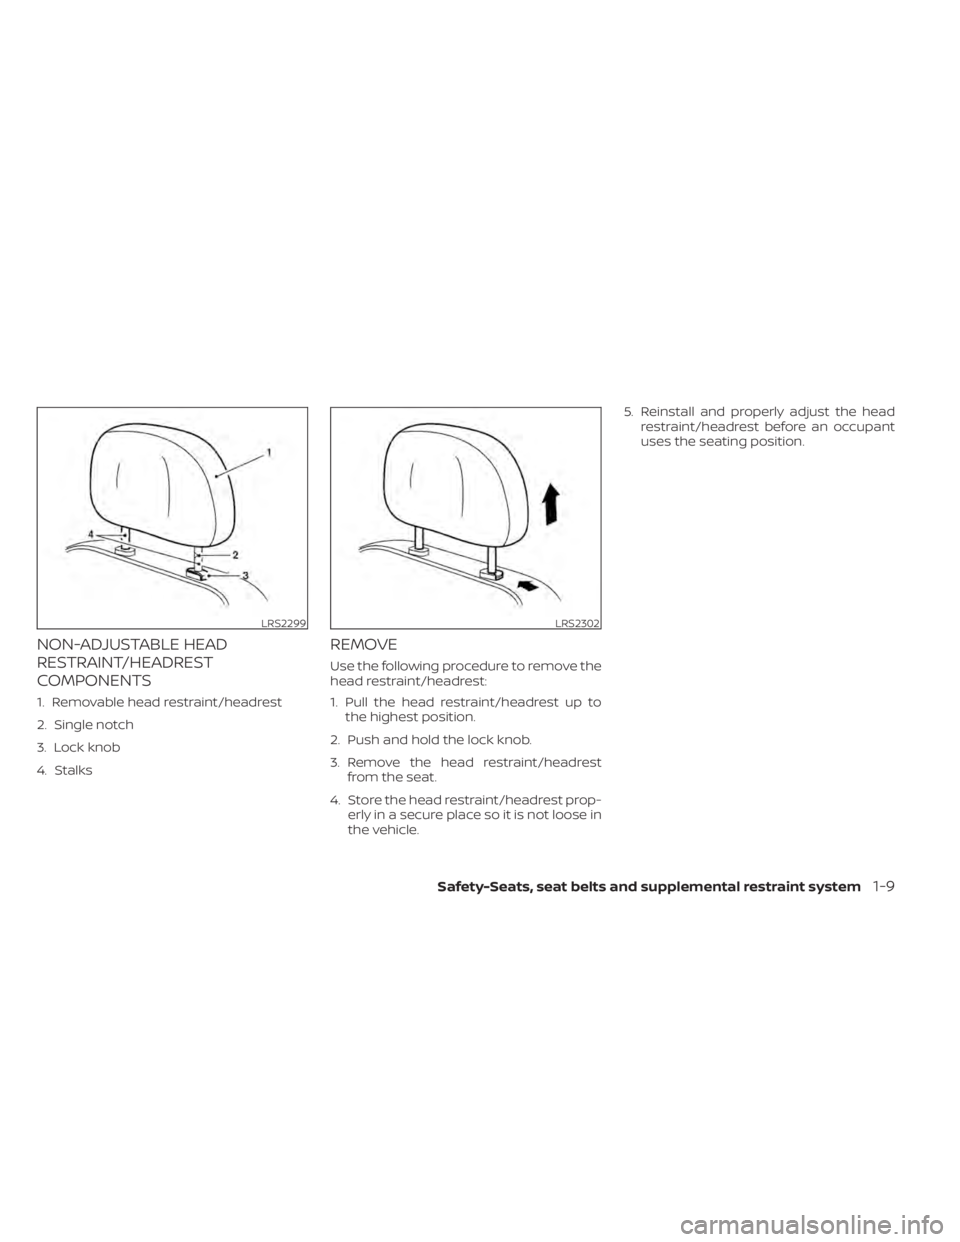 NISSAN SENTRA 2020  Owner´s Manual NON-ADJUSTABLE HEAD
RESTRAINT/HEADREST
COMPONENTS
1. Removable head restraint/headrest
2. Single notch
3. Lock knob
4. Stalks
REMOVE
Use the following procedure to remove the
head restraint/headrest:
